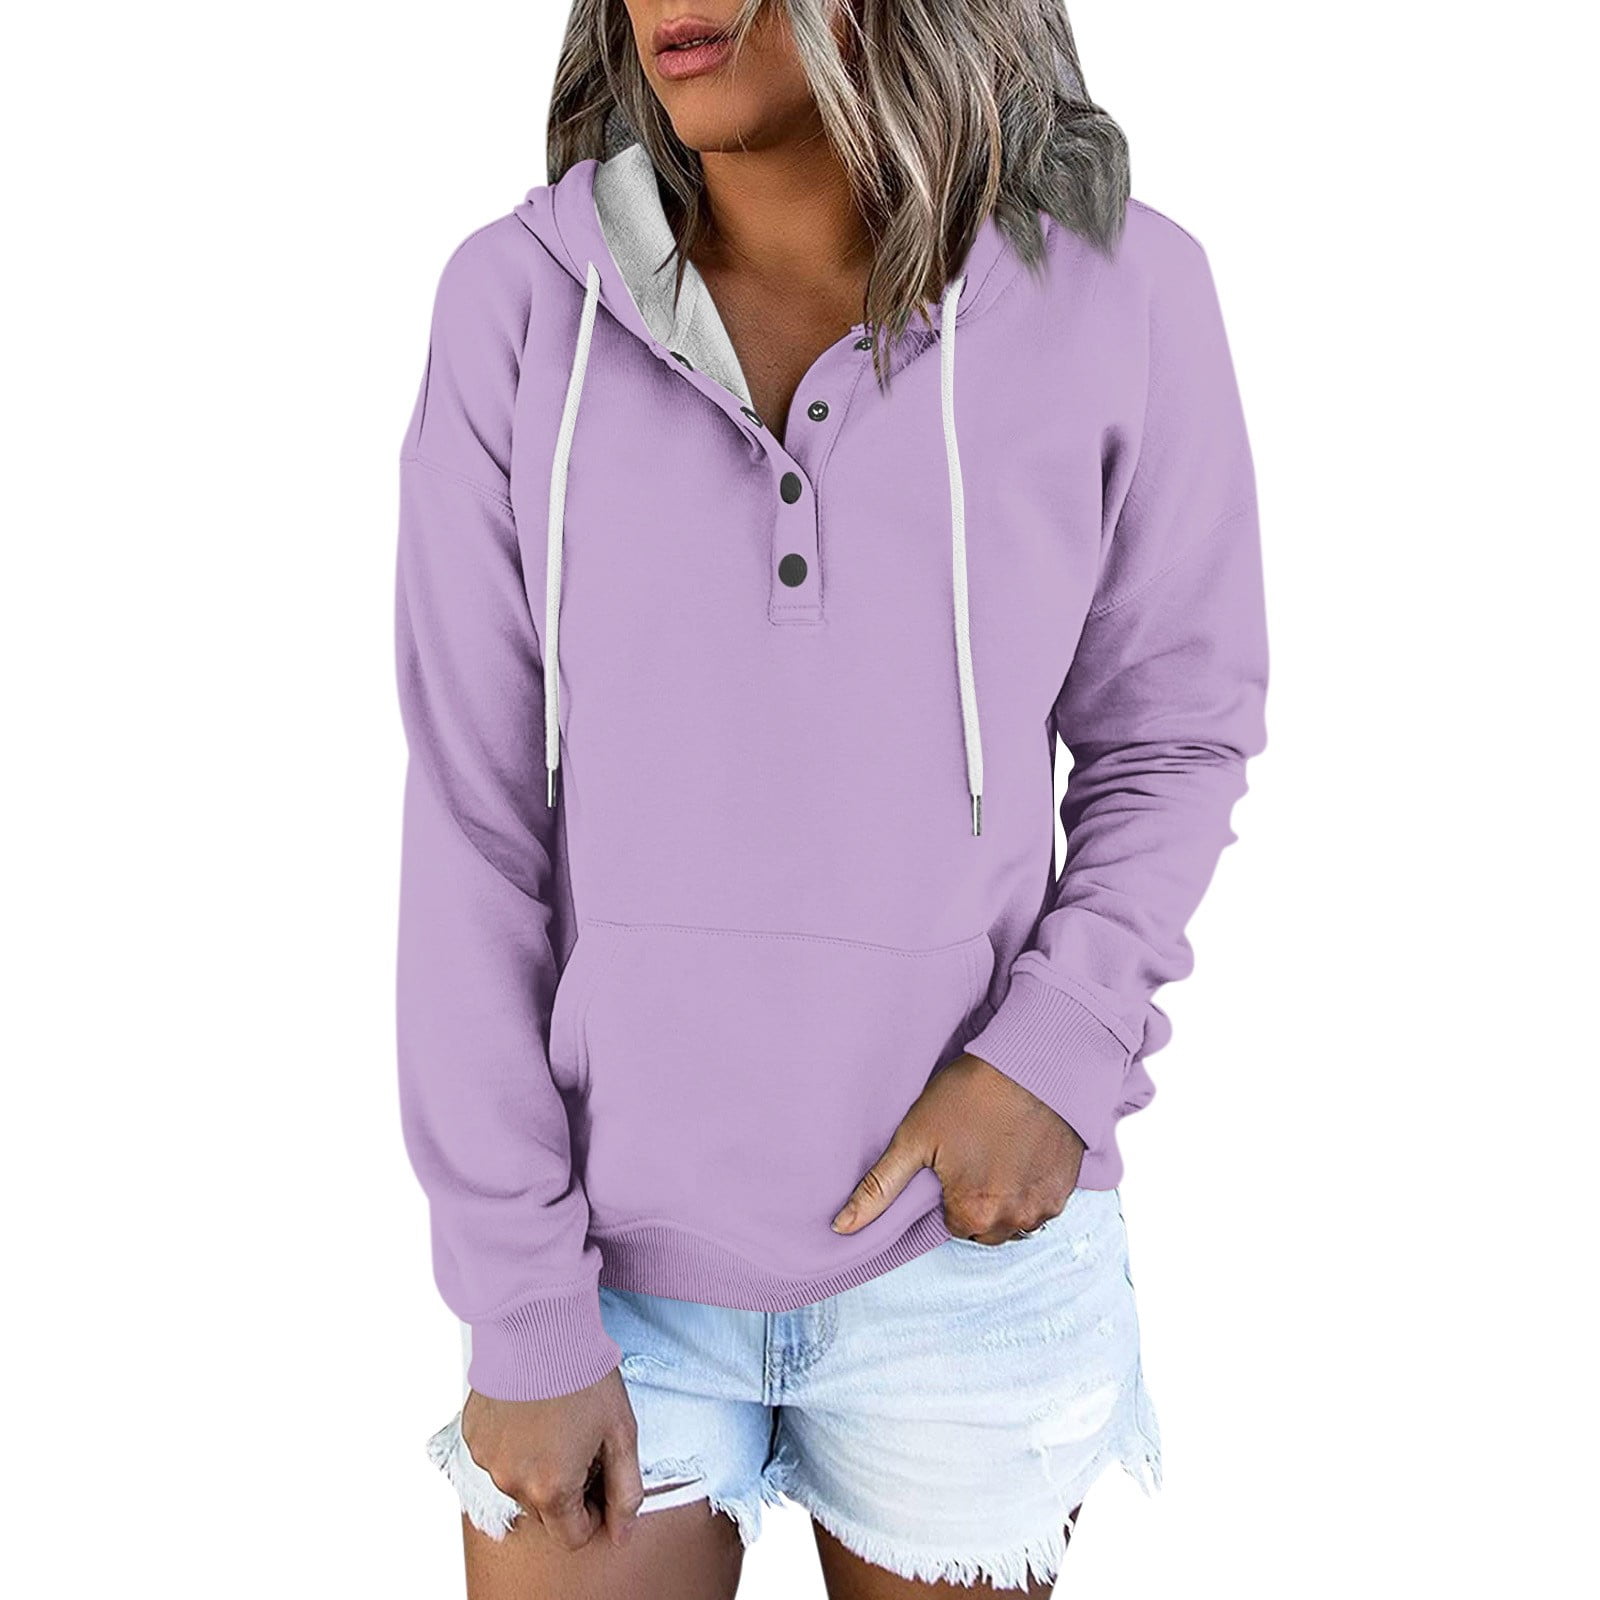 Cuoff Hoodie Sweatshirt for Women Women's Casual Fashion Solid